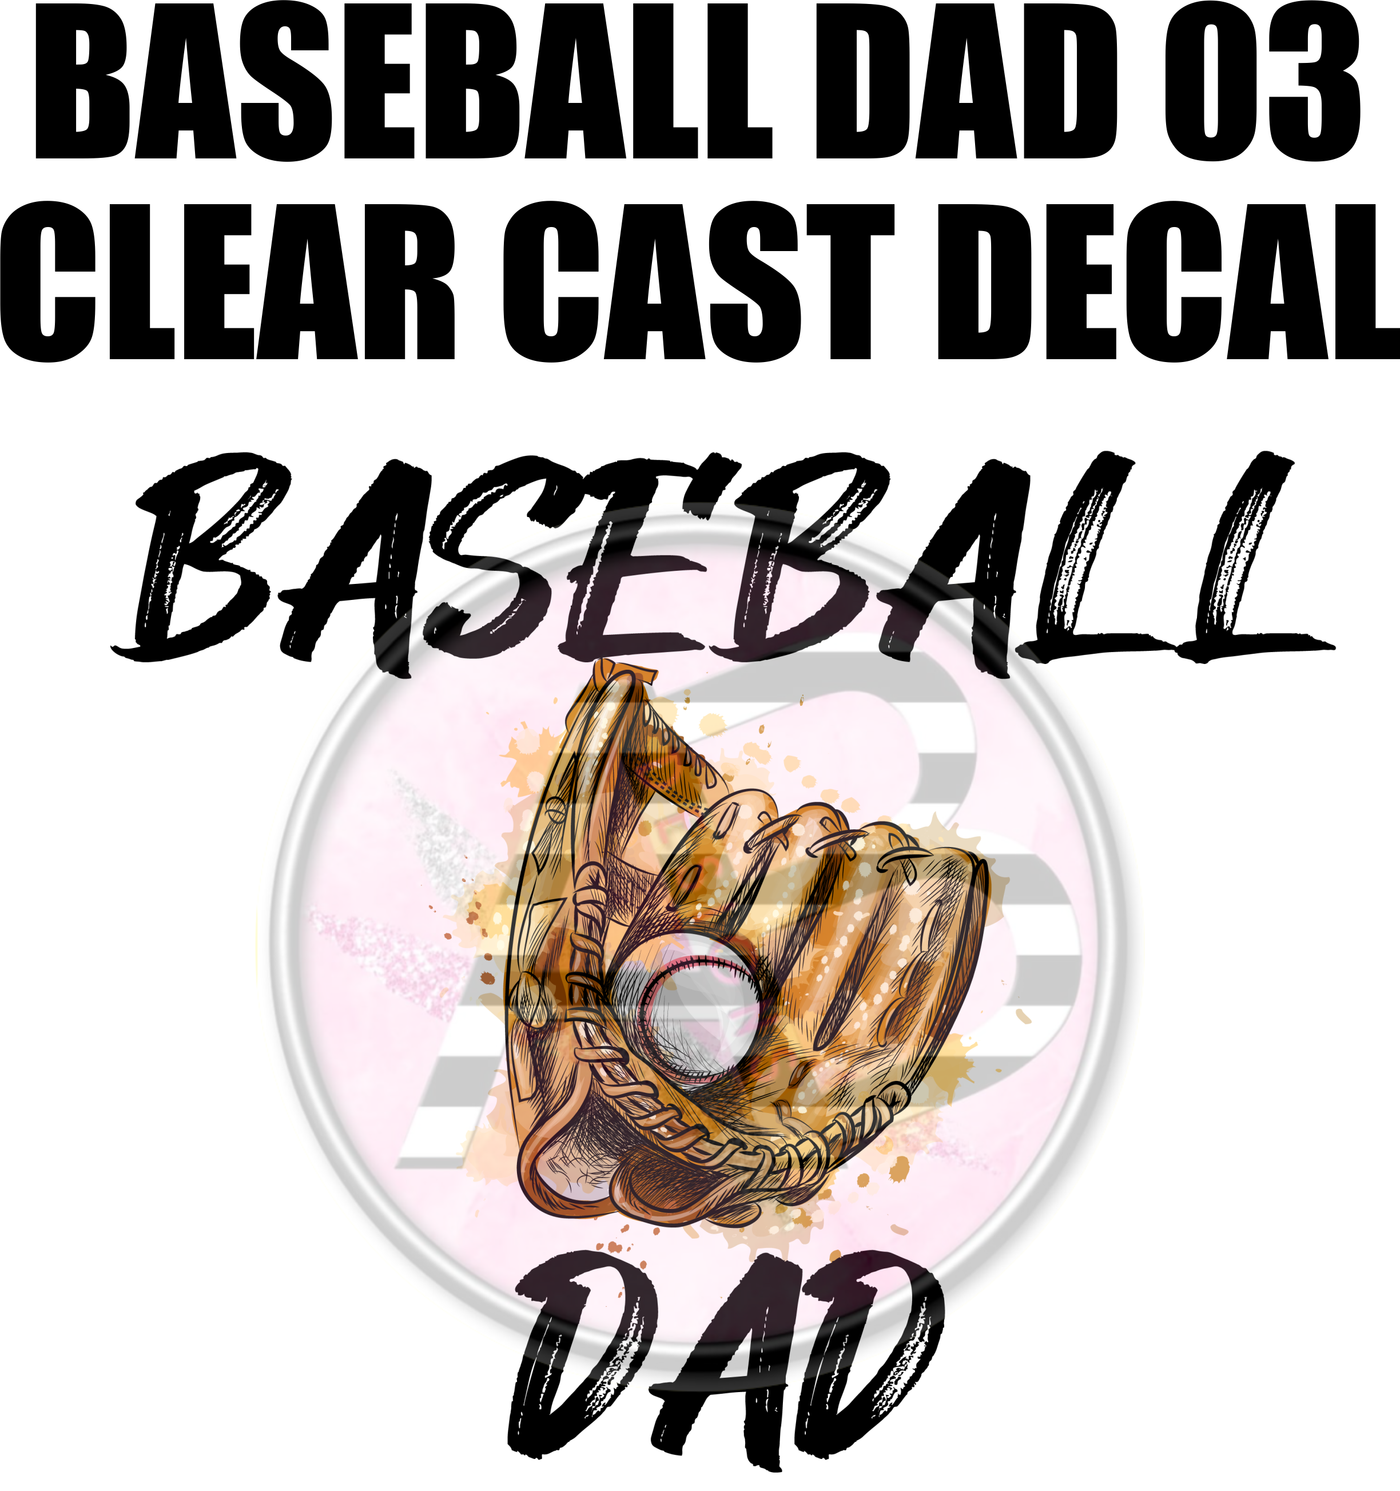 Baseball Dad 03 - Clear Cast Decal